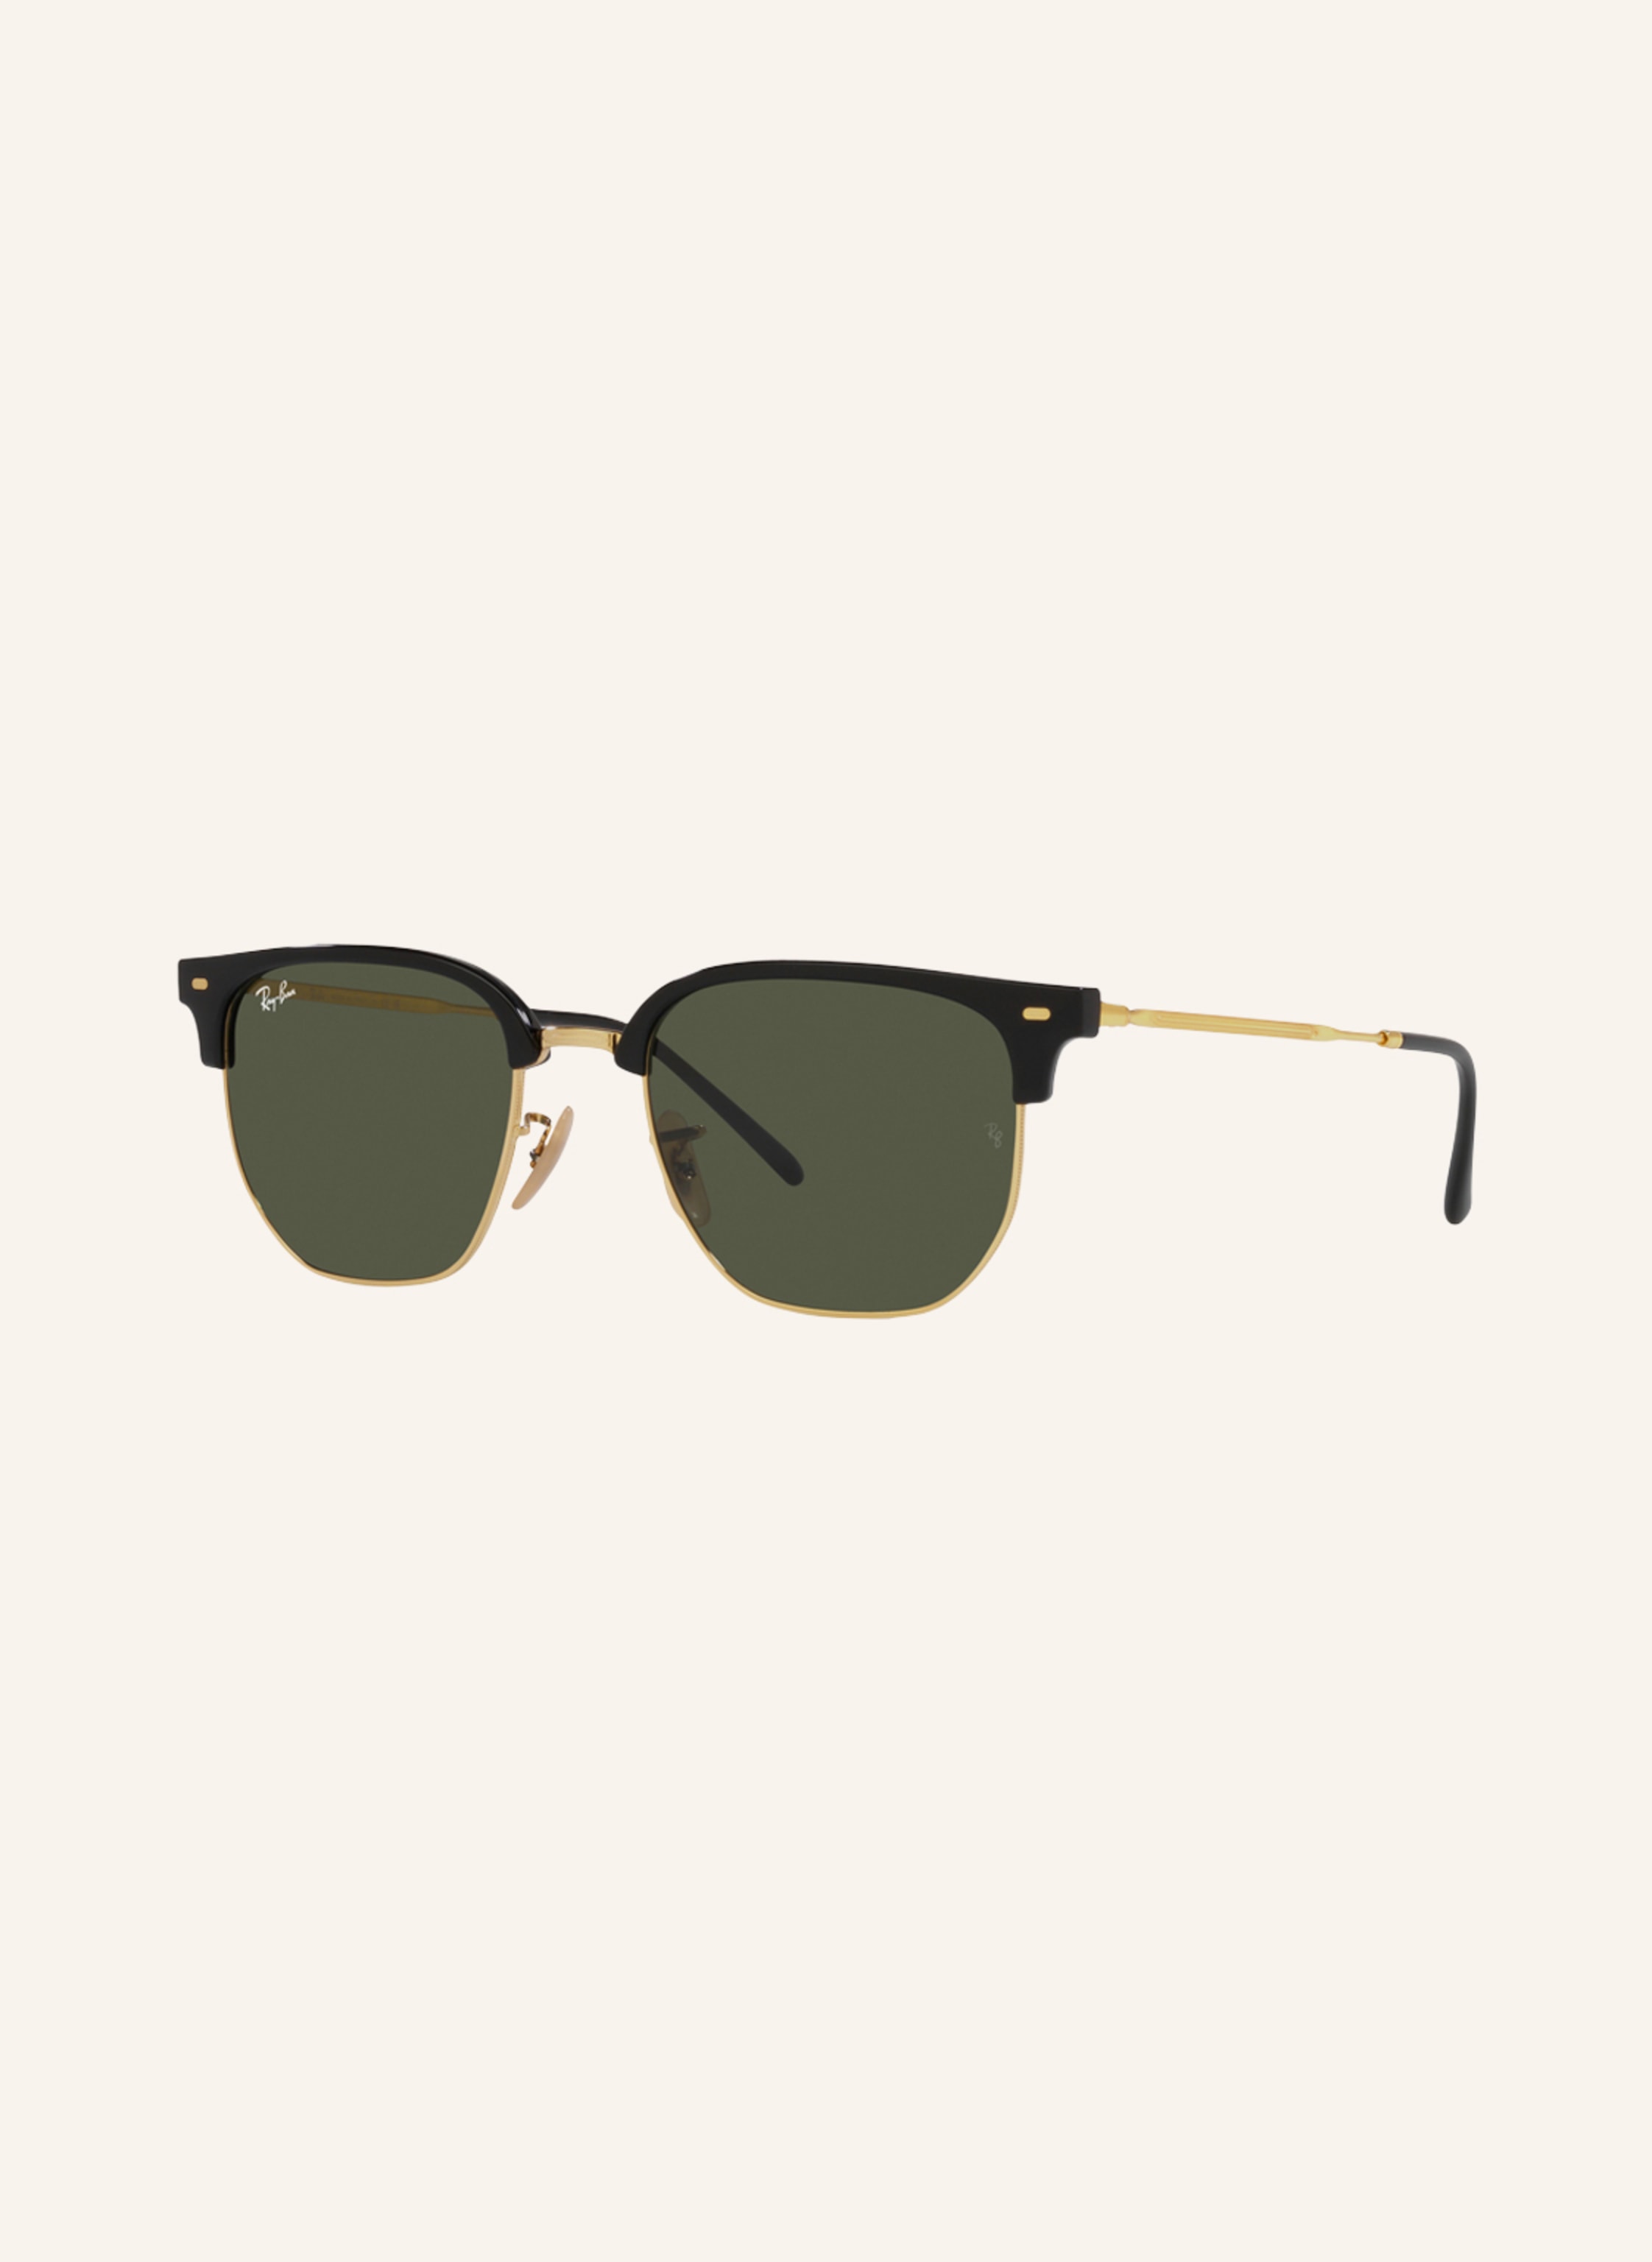 Ray-Ban Sunglasses RB4416 in 601/31 - gold/ black/ green | Breuninger